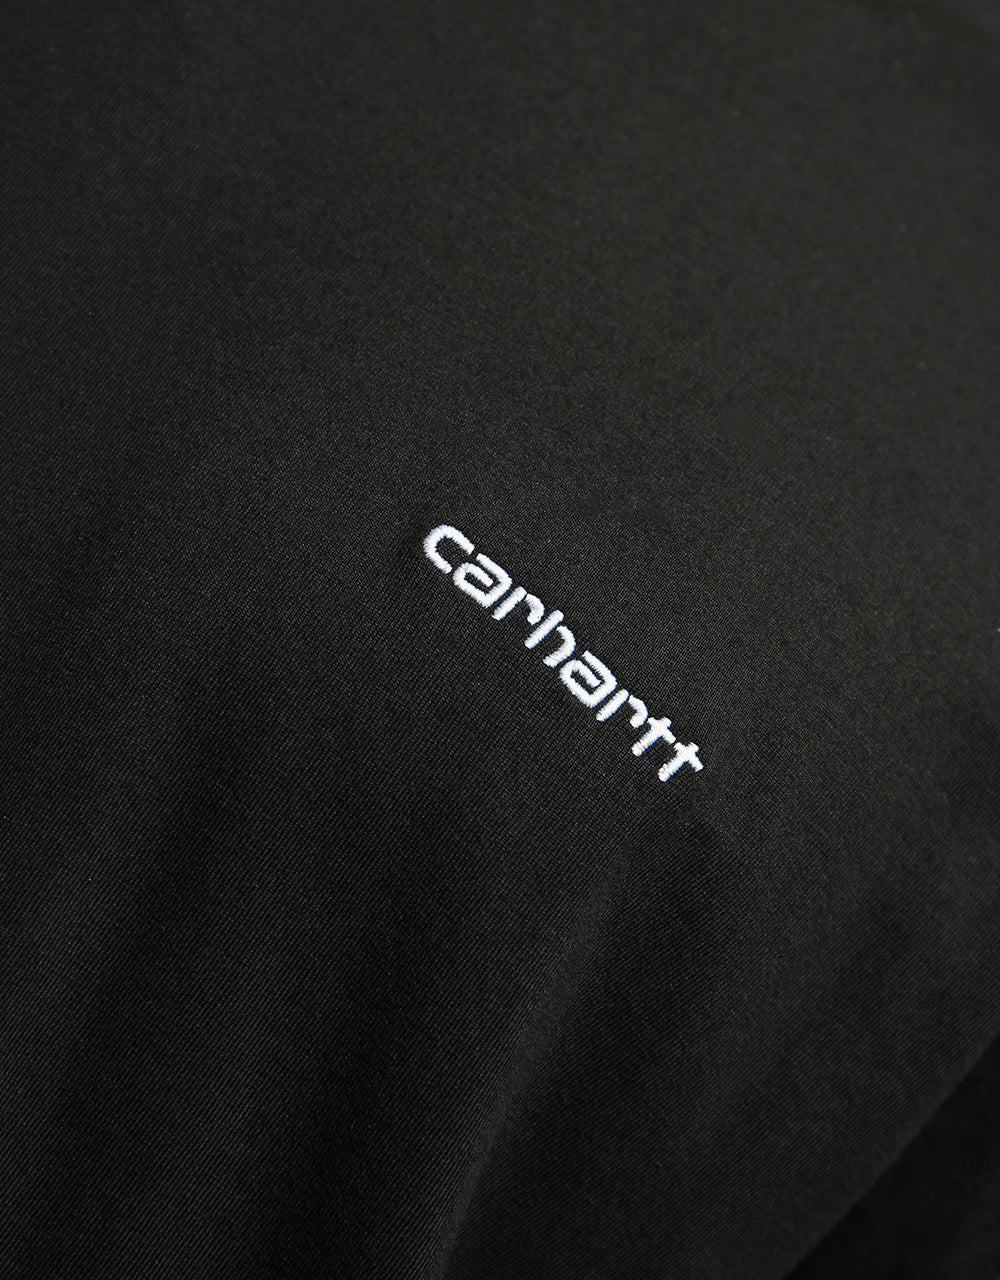 Carhartt WIP S/S Script Embroidery T-Shirt - Black/White